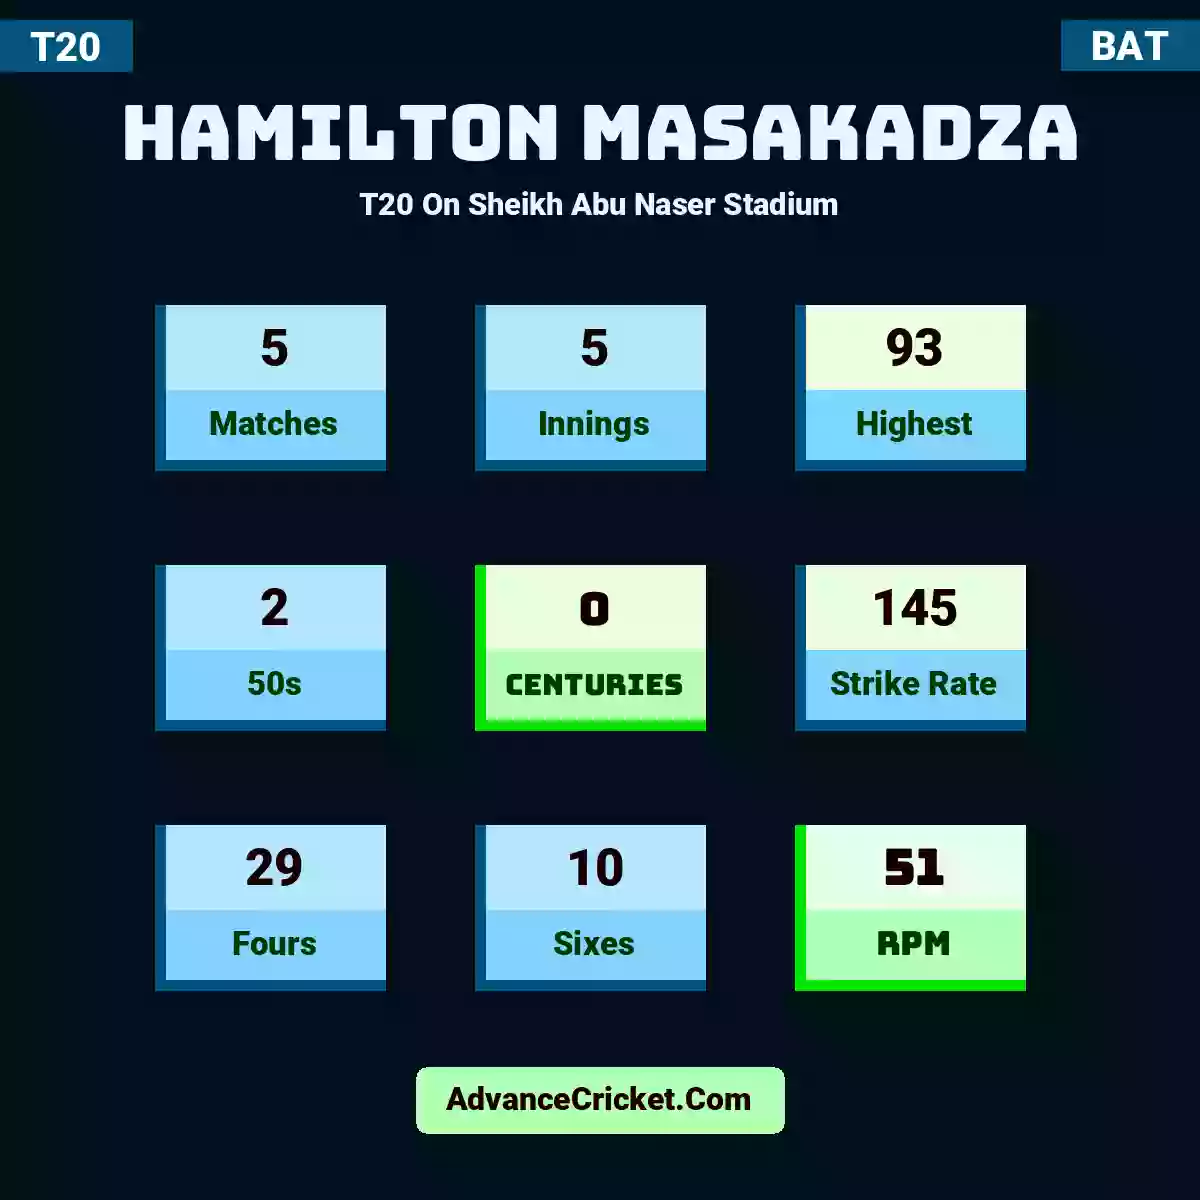 Hamilton Masakadza T20  On Sheikh Abu Naser Stadium, Hamilton Masakadza played 5 matches, scored 93 runs as highest, 2 half-centuries, and 0 centuries, with a strike rate of 145. H.Masakadza hit 29 fours and 10 sixes, with an RPM of 51.